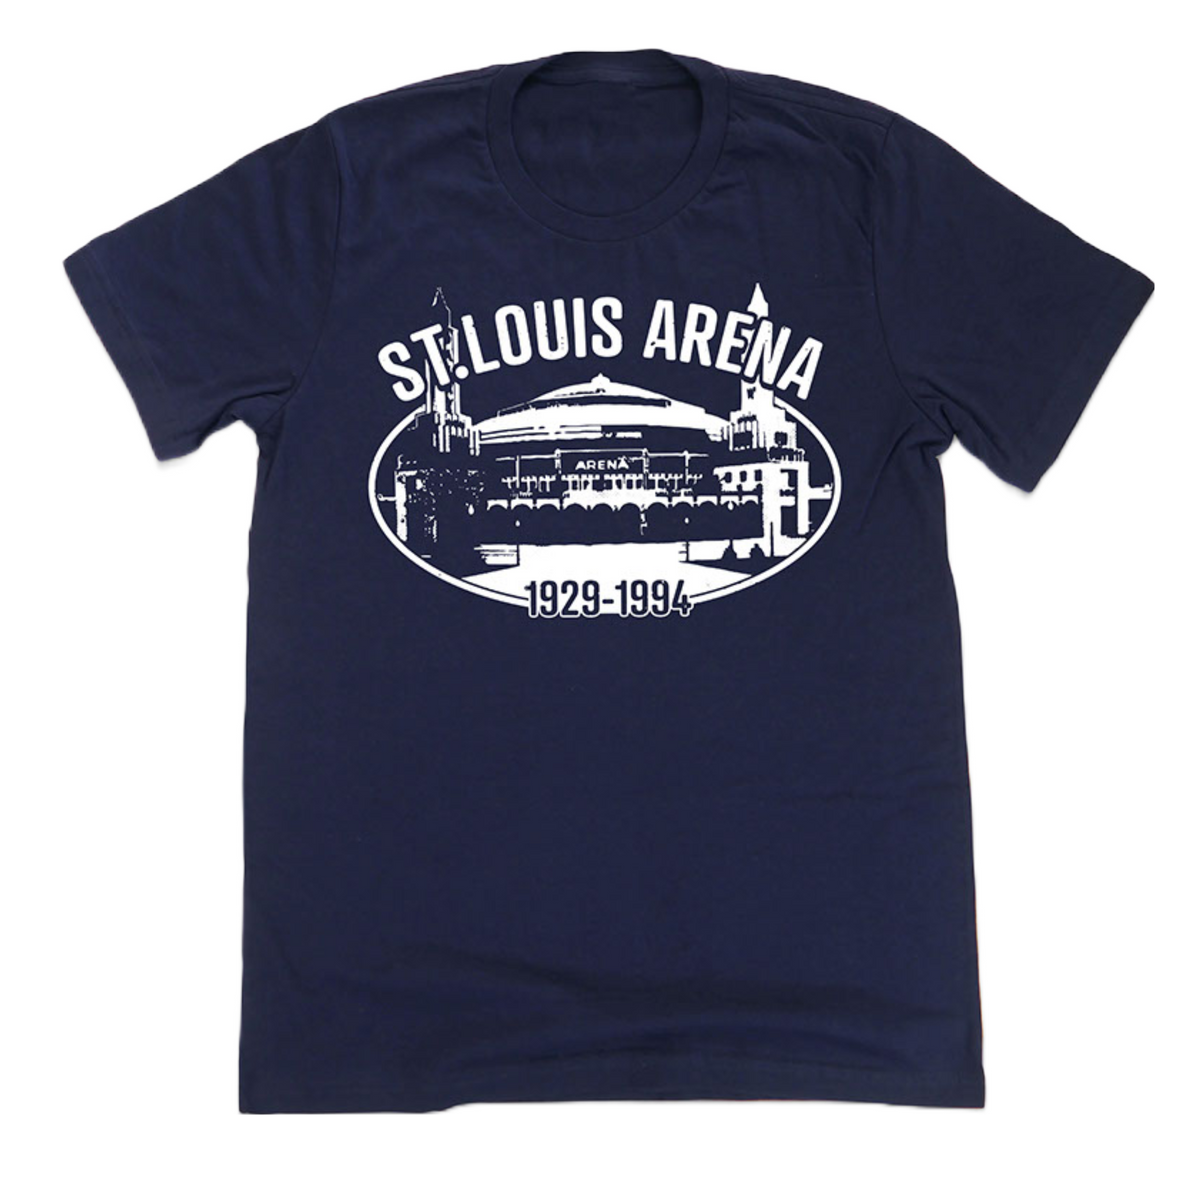 St. Louis Arena